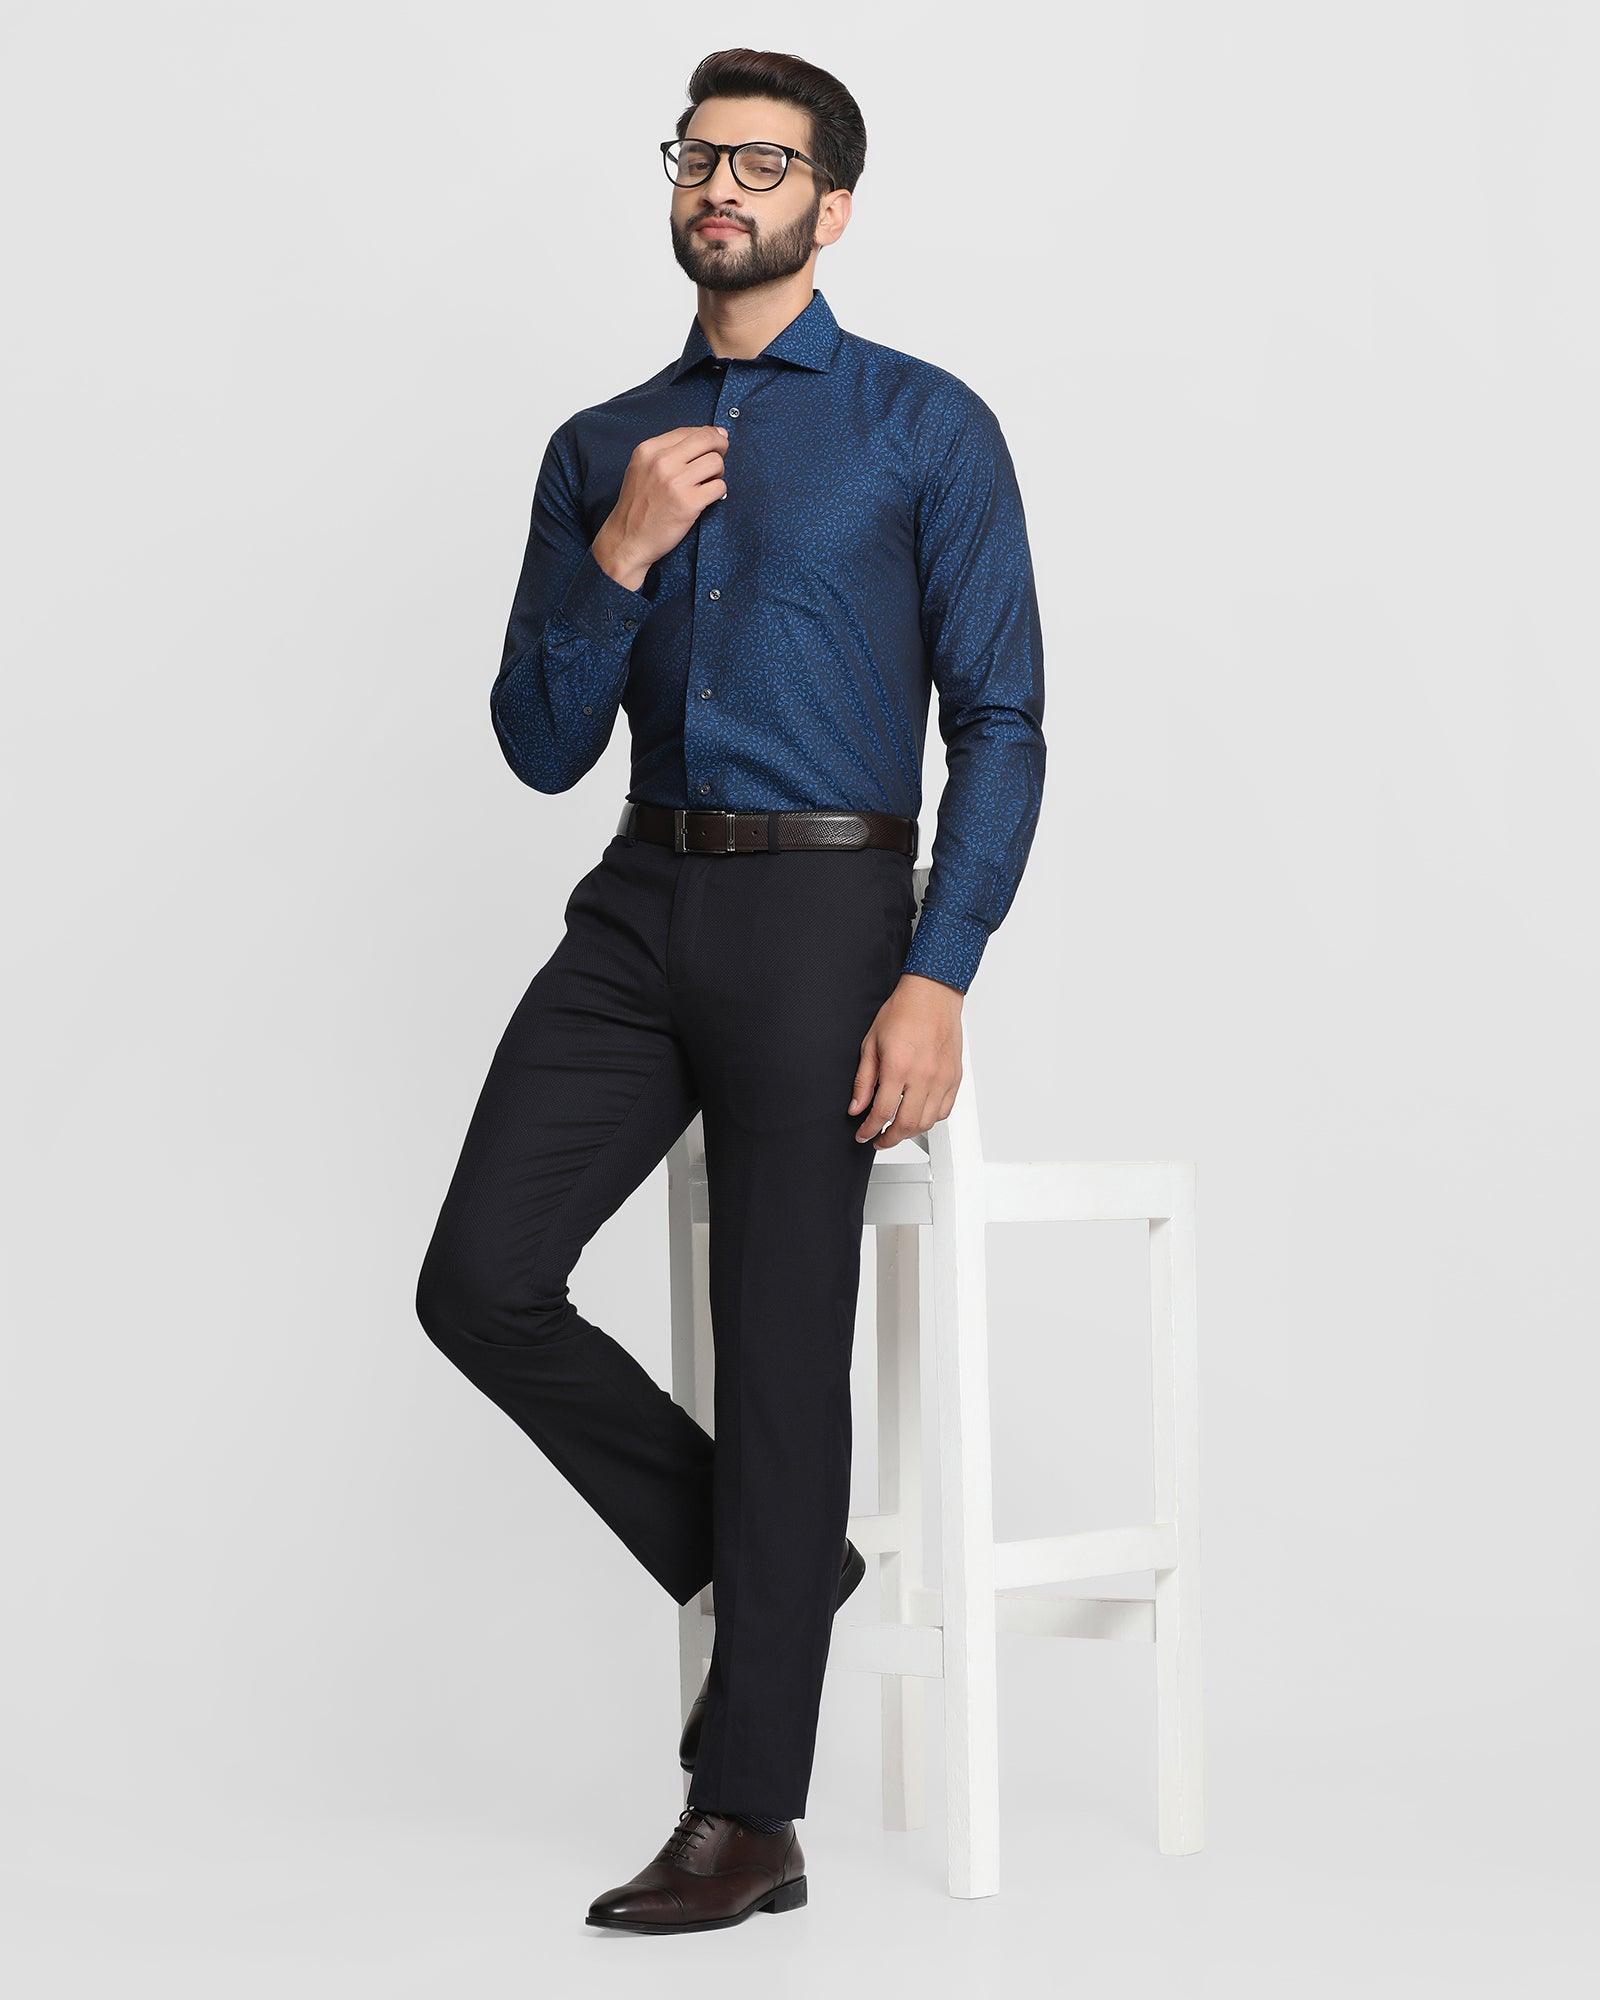 Dark Blue Shirt Black Pants Black Shoes Black Belt - Men's Fashion For Less